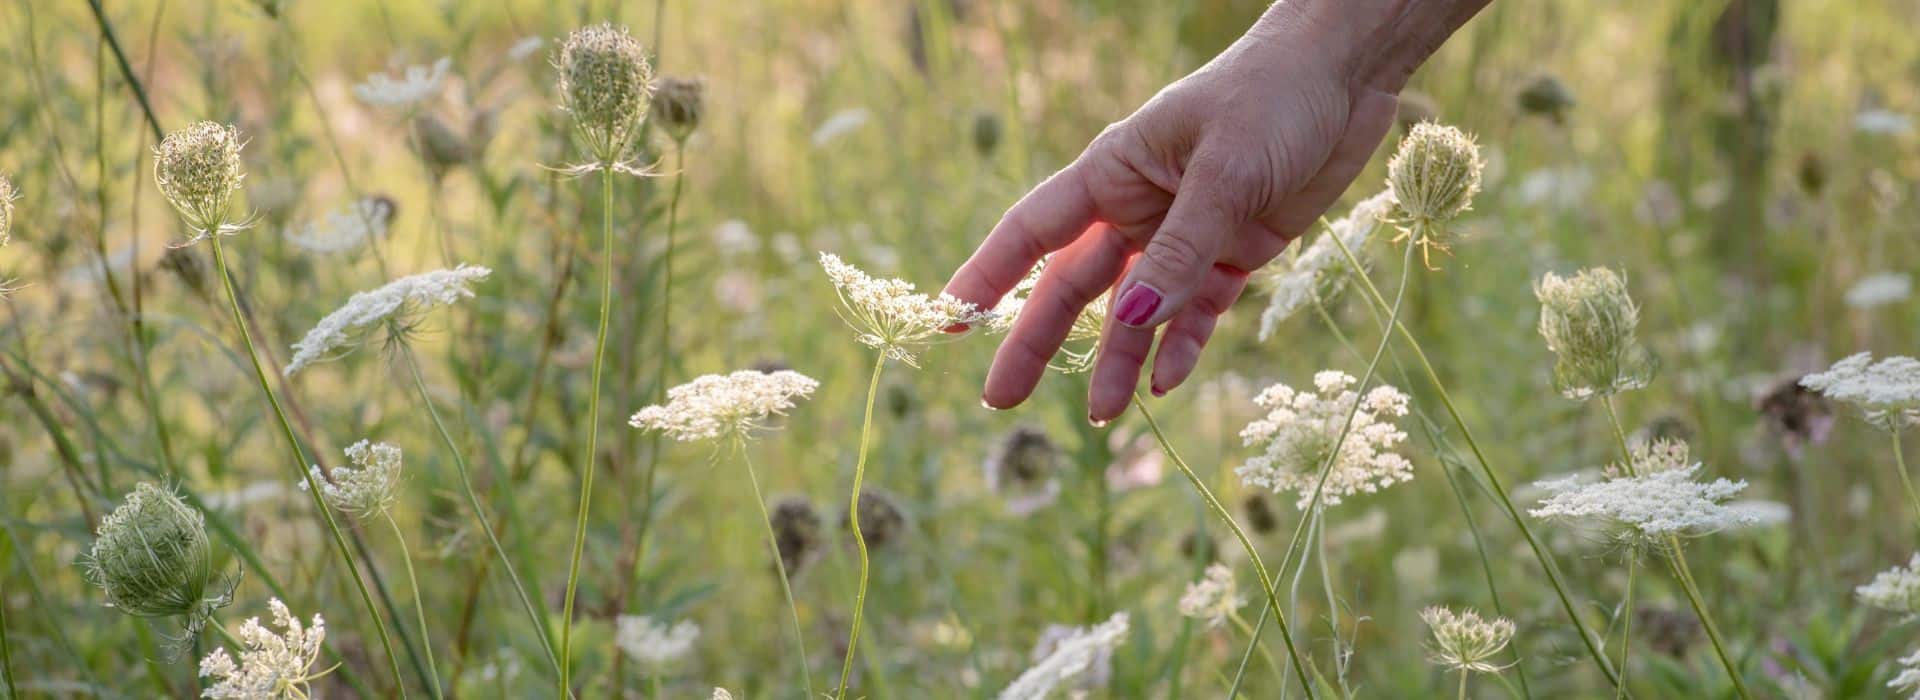 Woman's hand in wild flowers | How to live more joyfully | Shine Body & Bath Chakra Soap | Blog